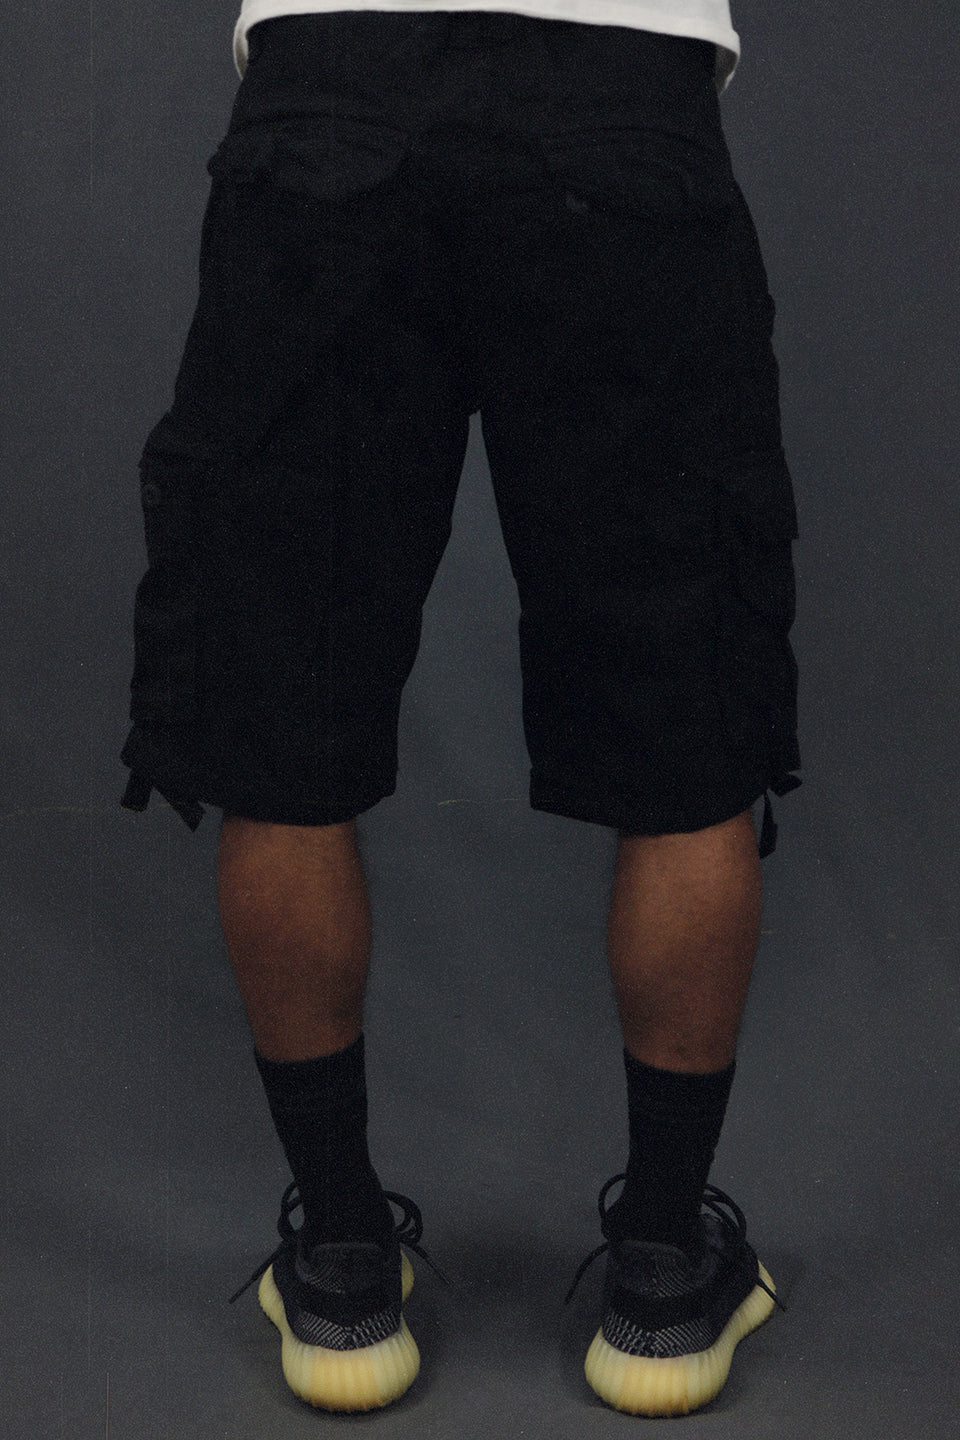 Men's Black Combat Shorts Six Pocket Cargo Shorts To Match Sneakers | Black